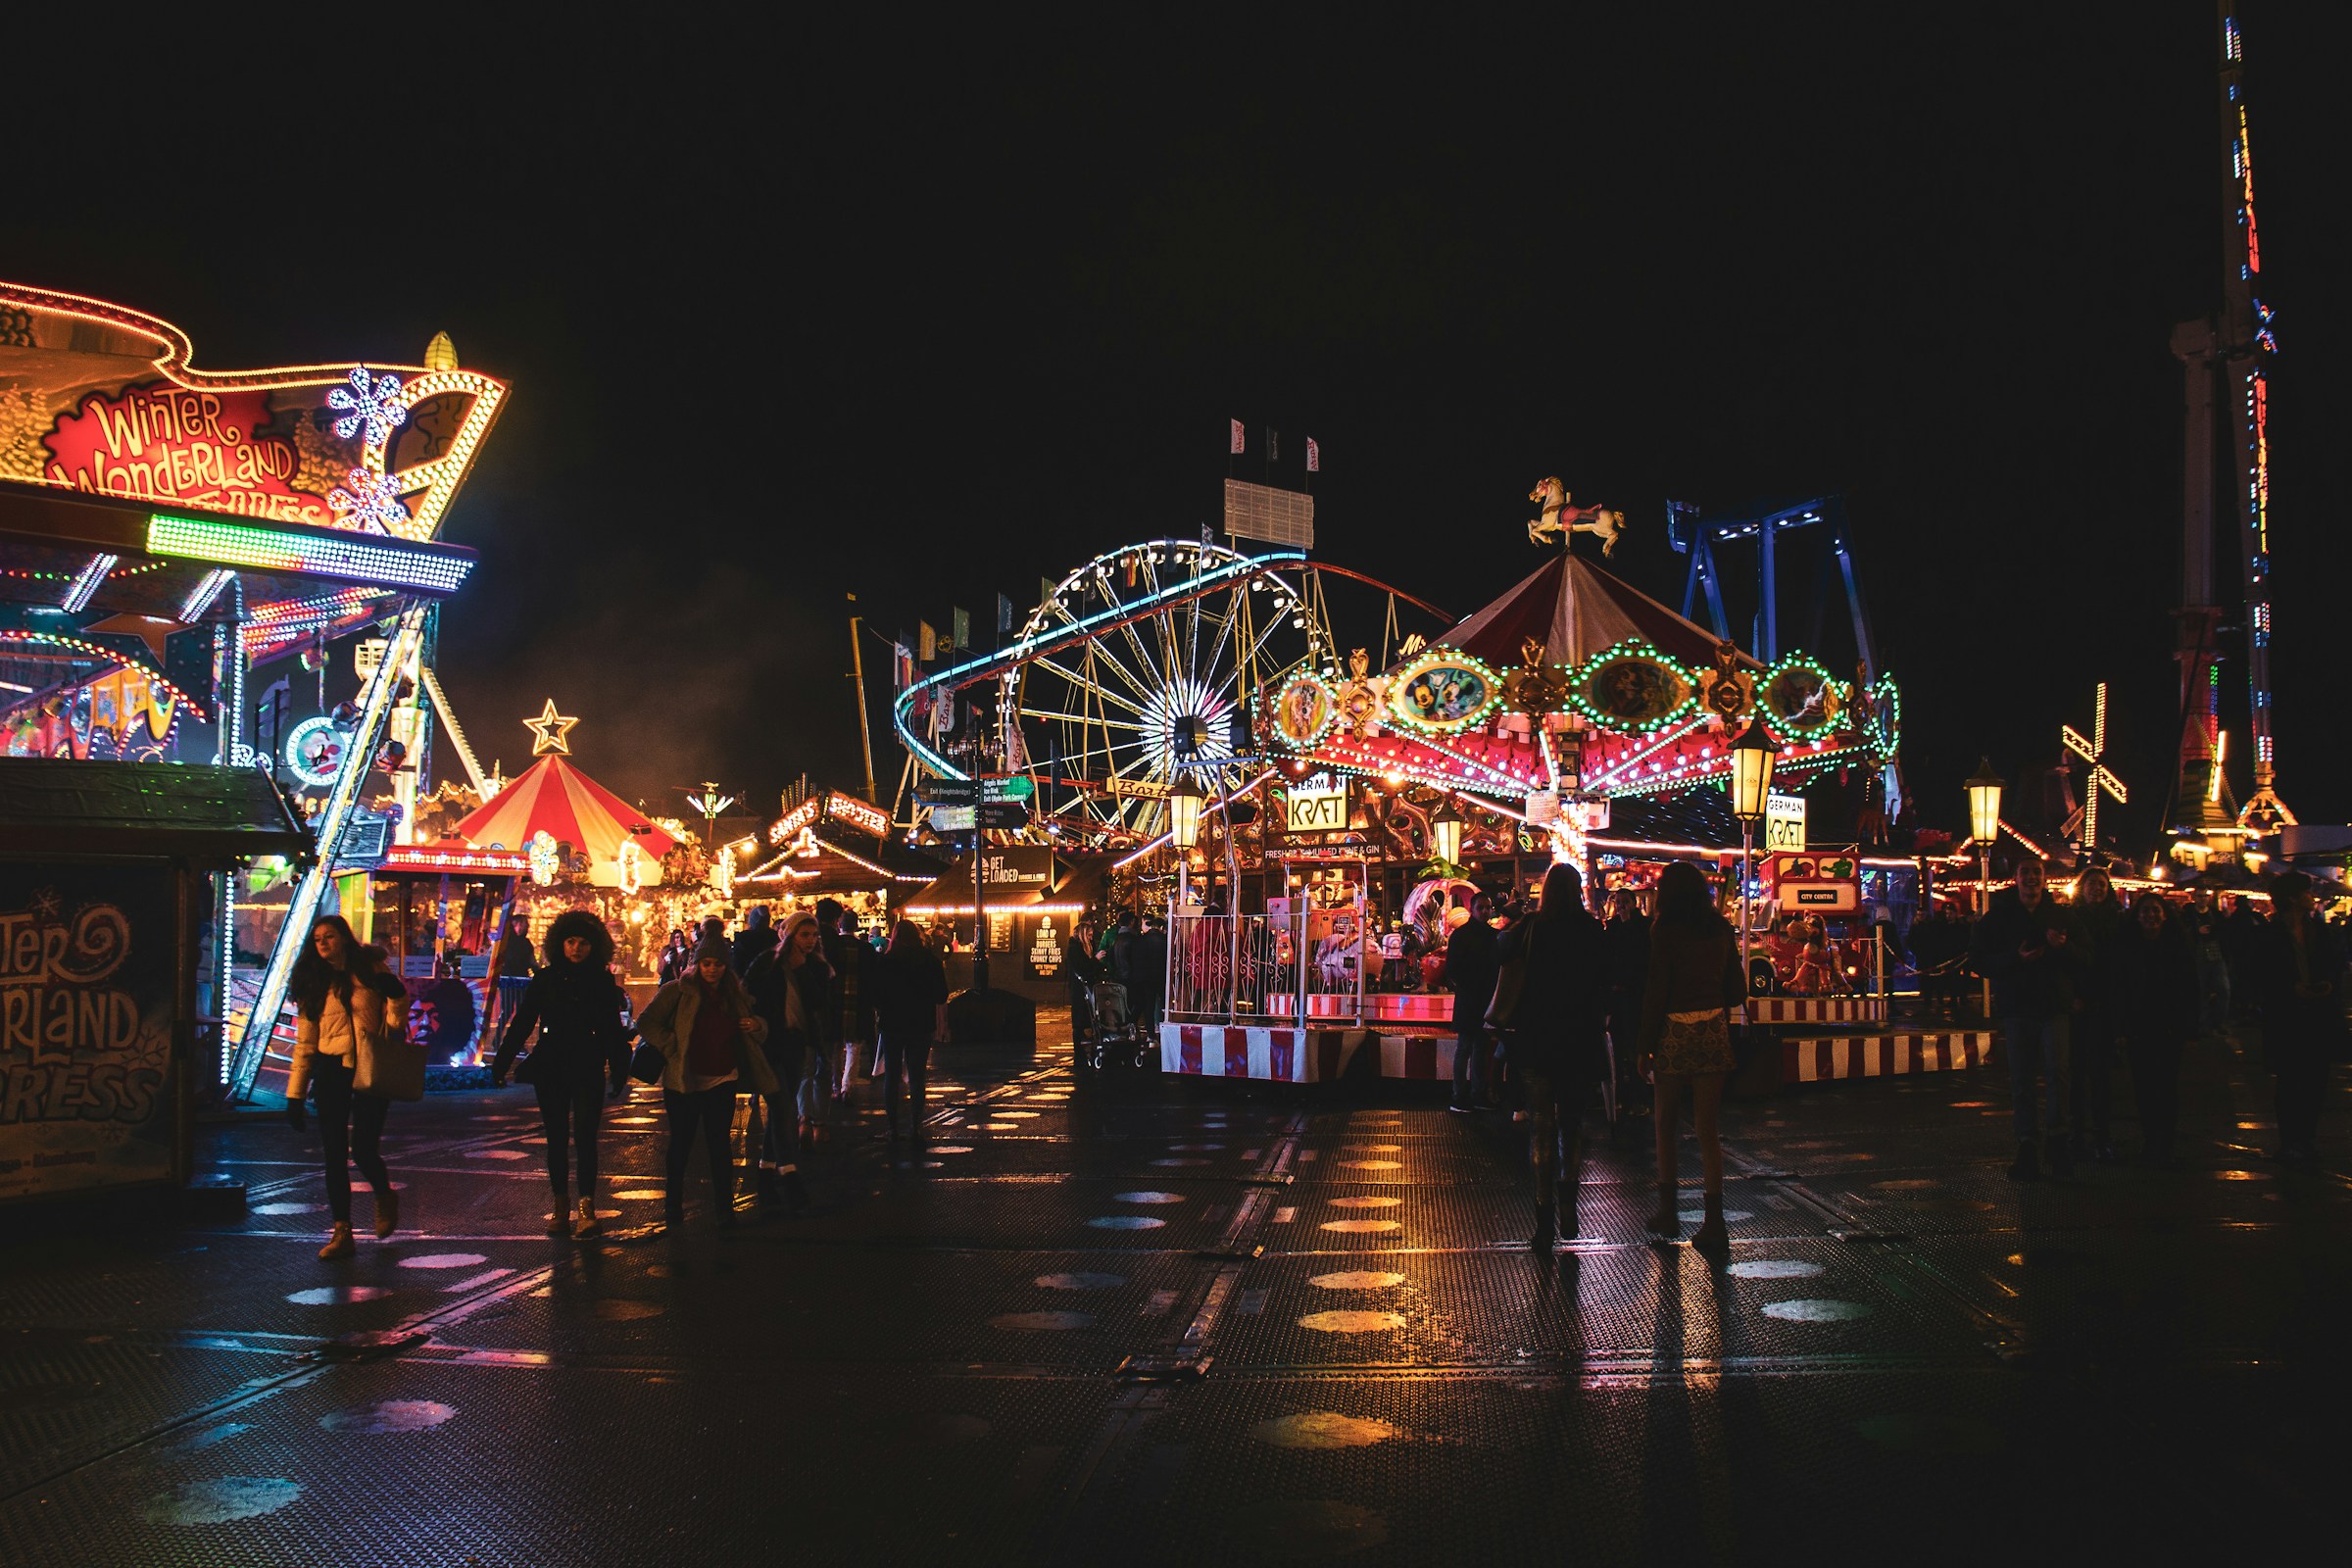 A carnival at night | Source: Unsplash